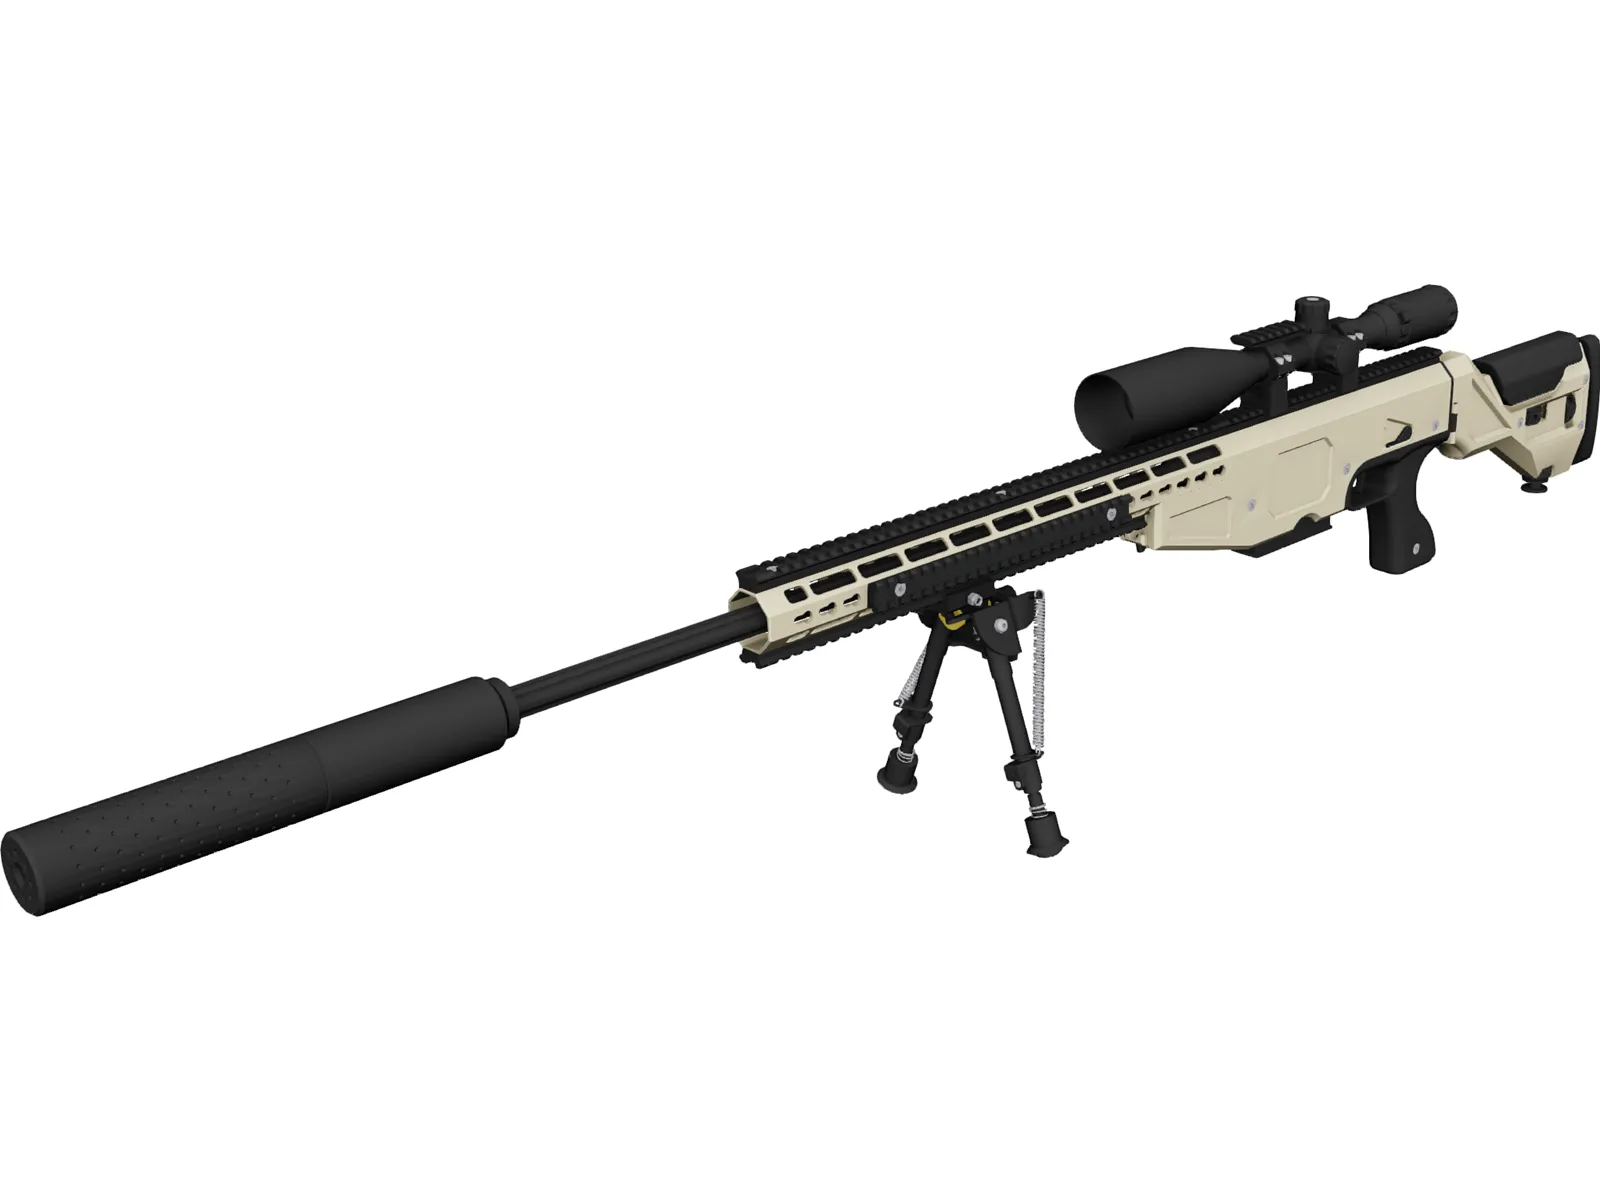 .338 Lapua Magnum Sniper Rifle 3D Model